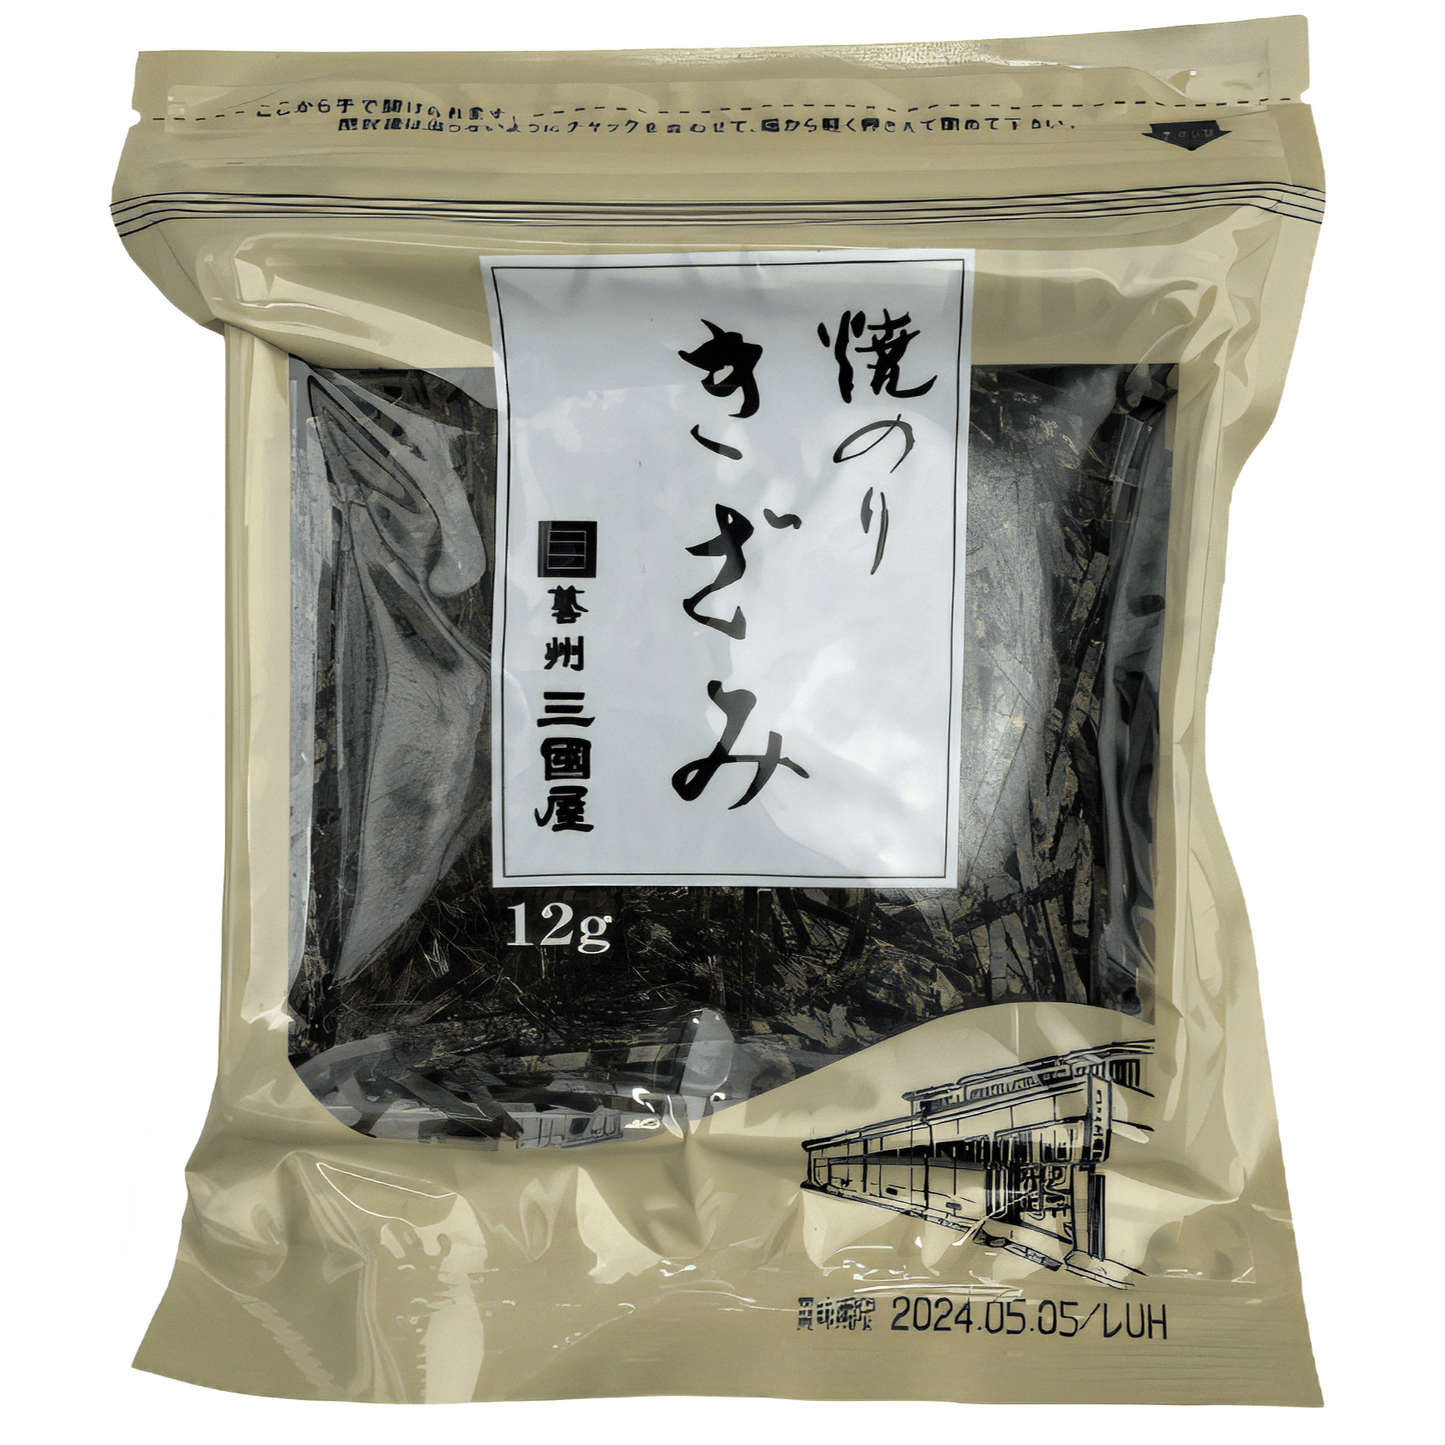 Mikuniya Kizami Shredded Roasted Seaweed 12g / 三國屋 焼のり きざみ 12g - RiceWineShop